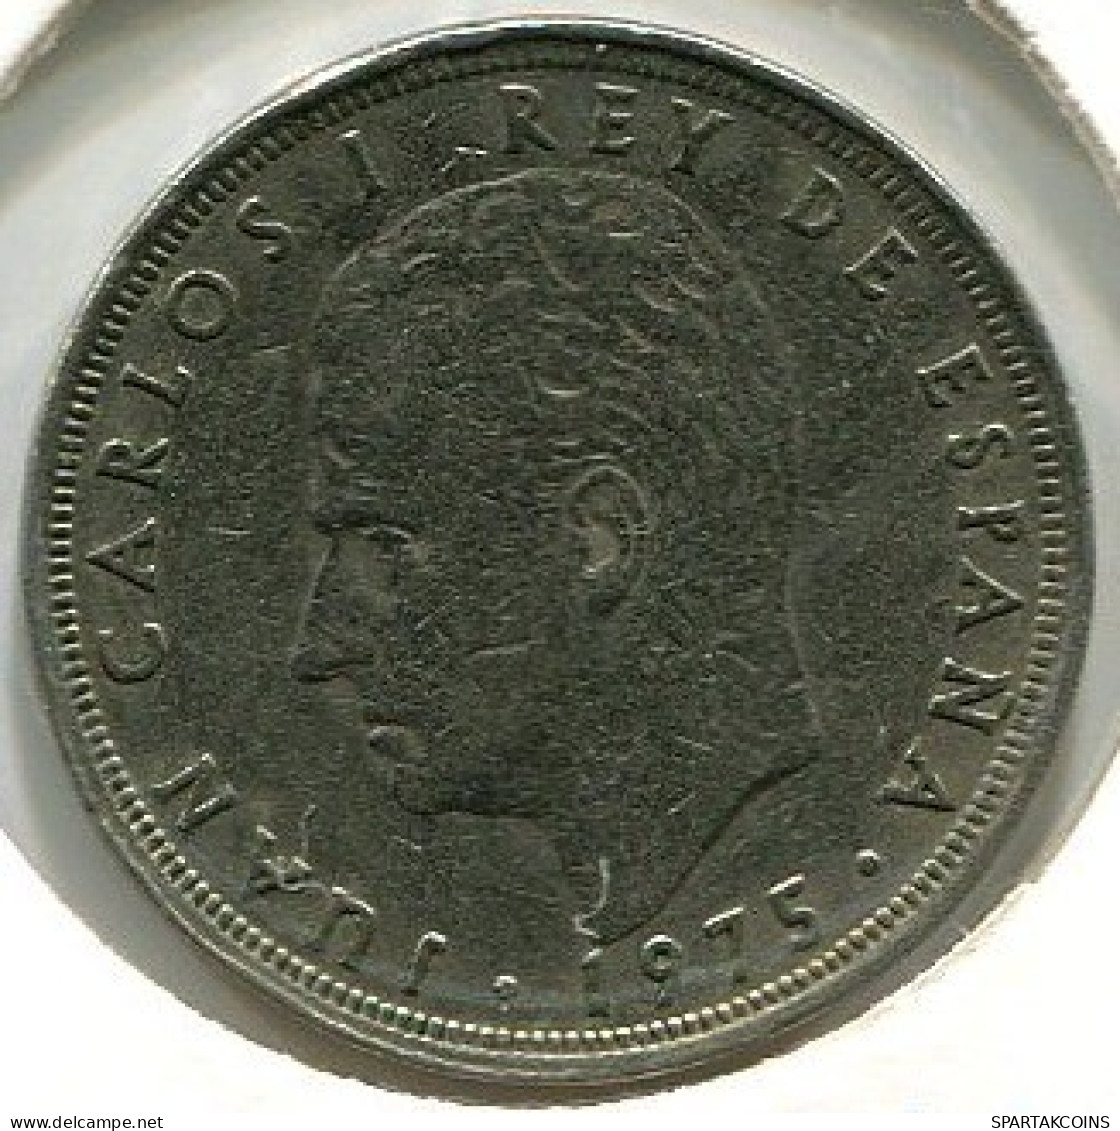 25 PESETAS 1975 SPAIN Coin #W10542.2.U.A - 25 Pesetas